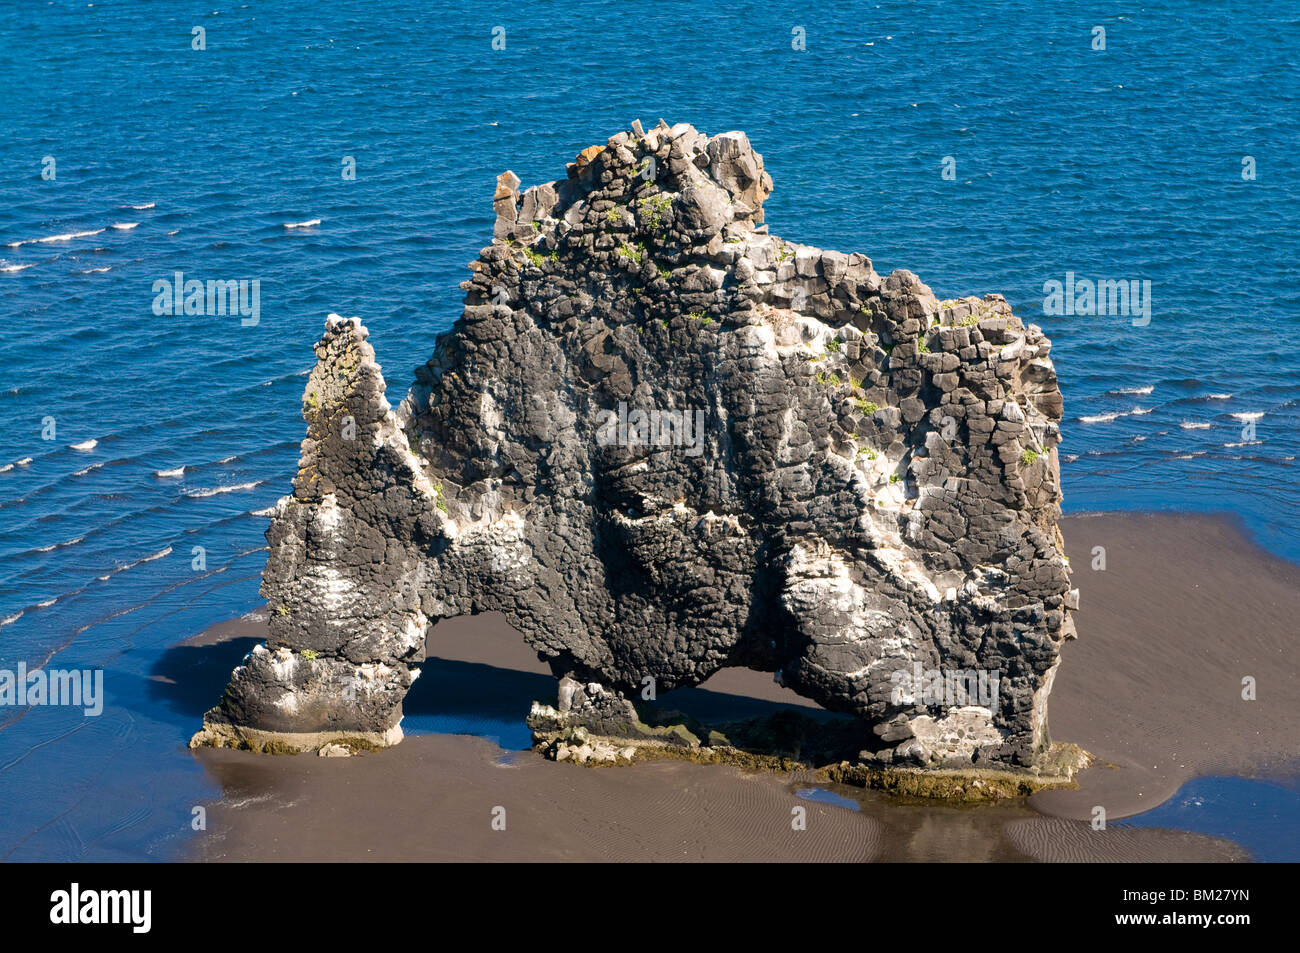 Famous Hvitserkur rock formation offshore, Vatnsnes Peninsula, Iceland, Polar Regions Stock Photo